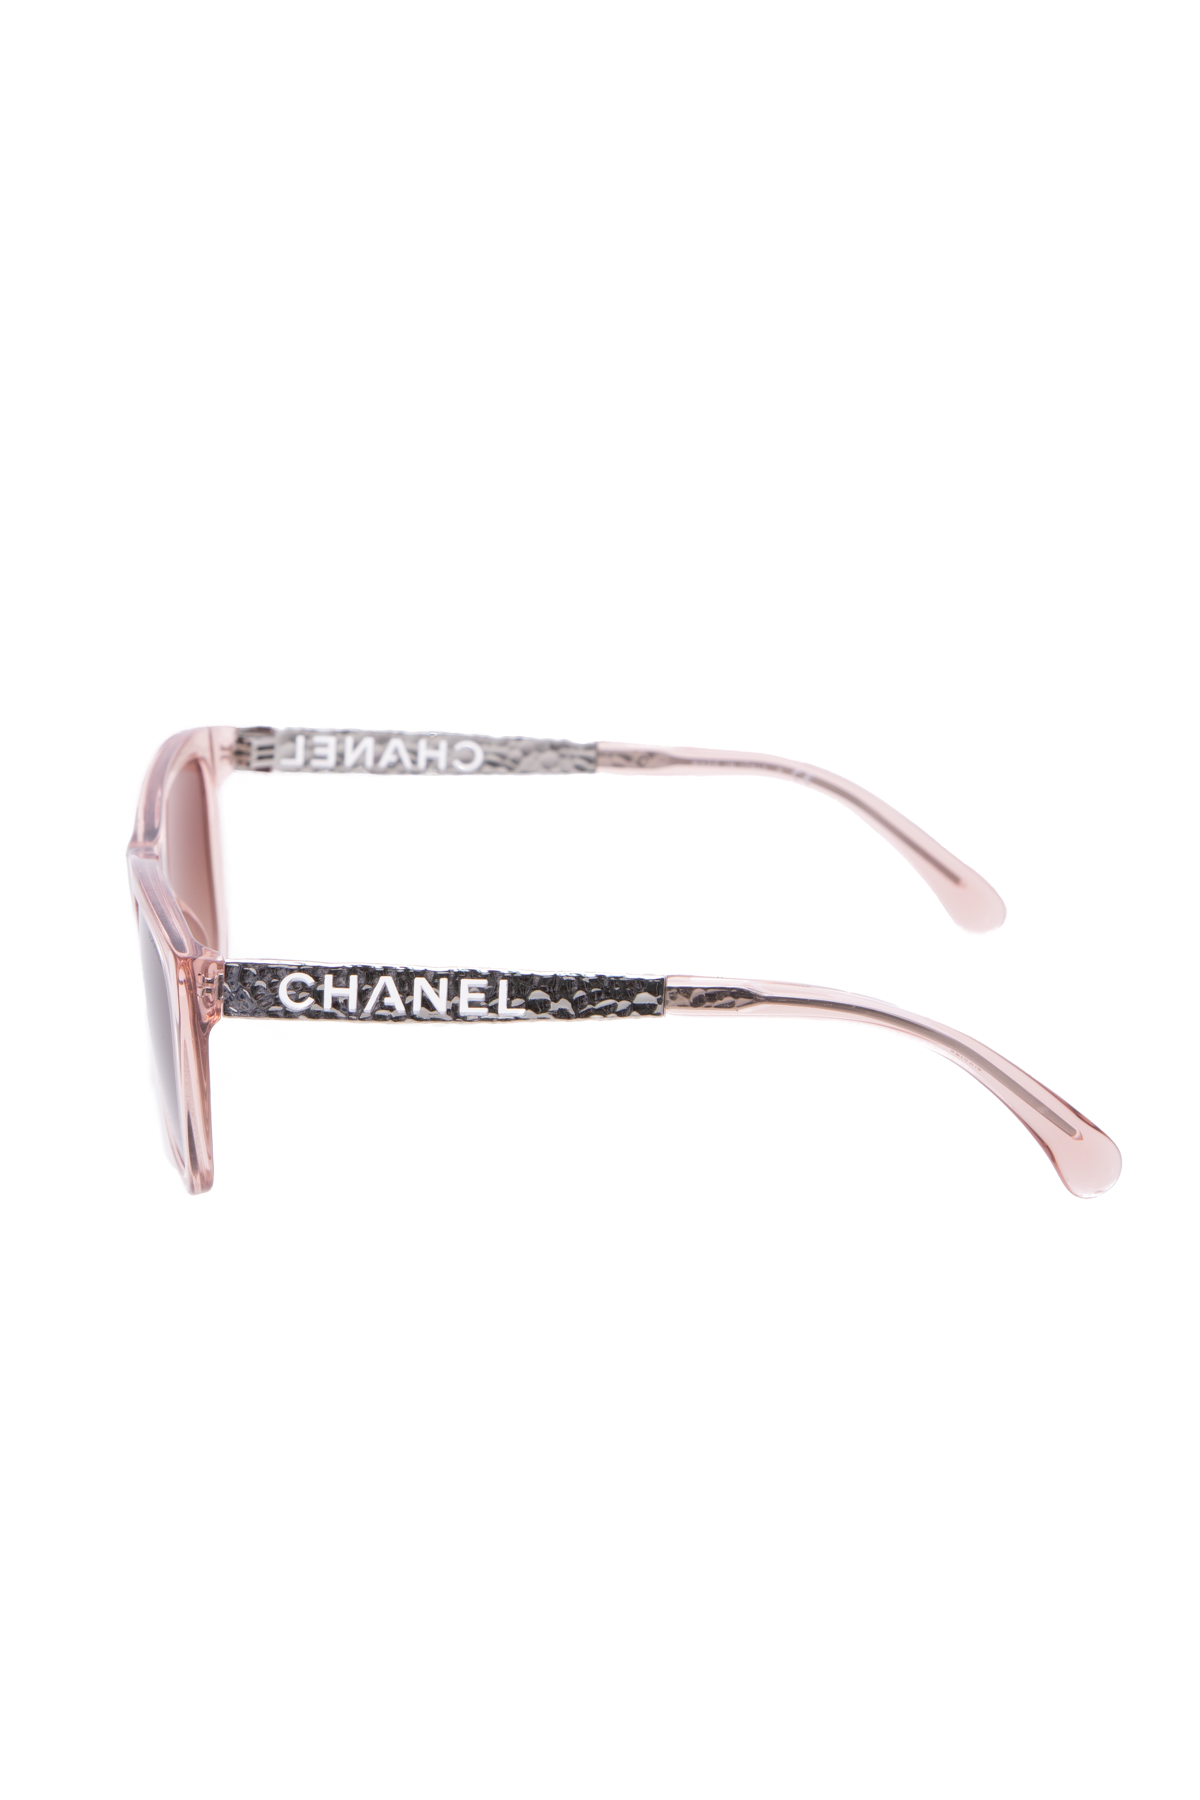 CHANEL Paris 5099 Black Quilted Women’s Sunglasses